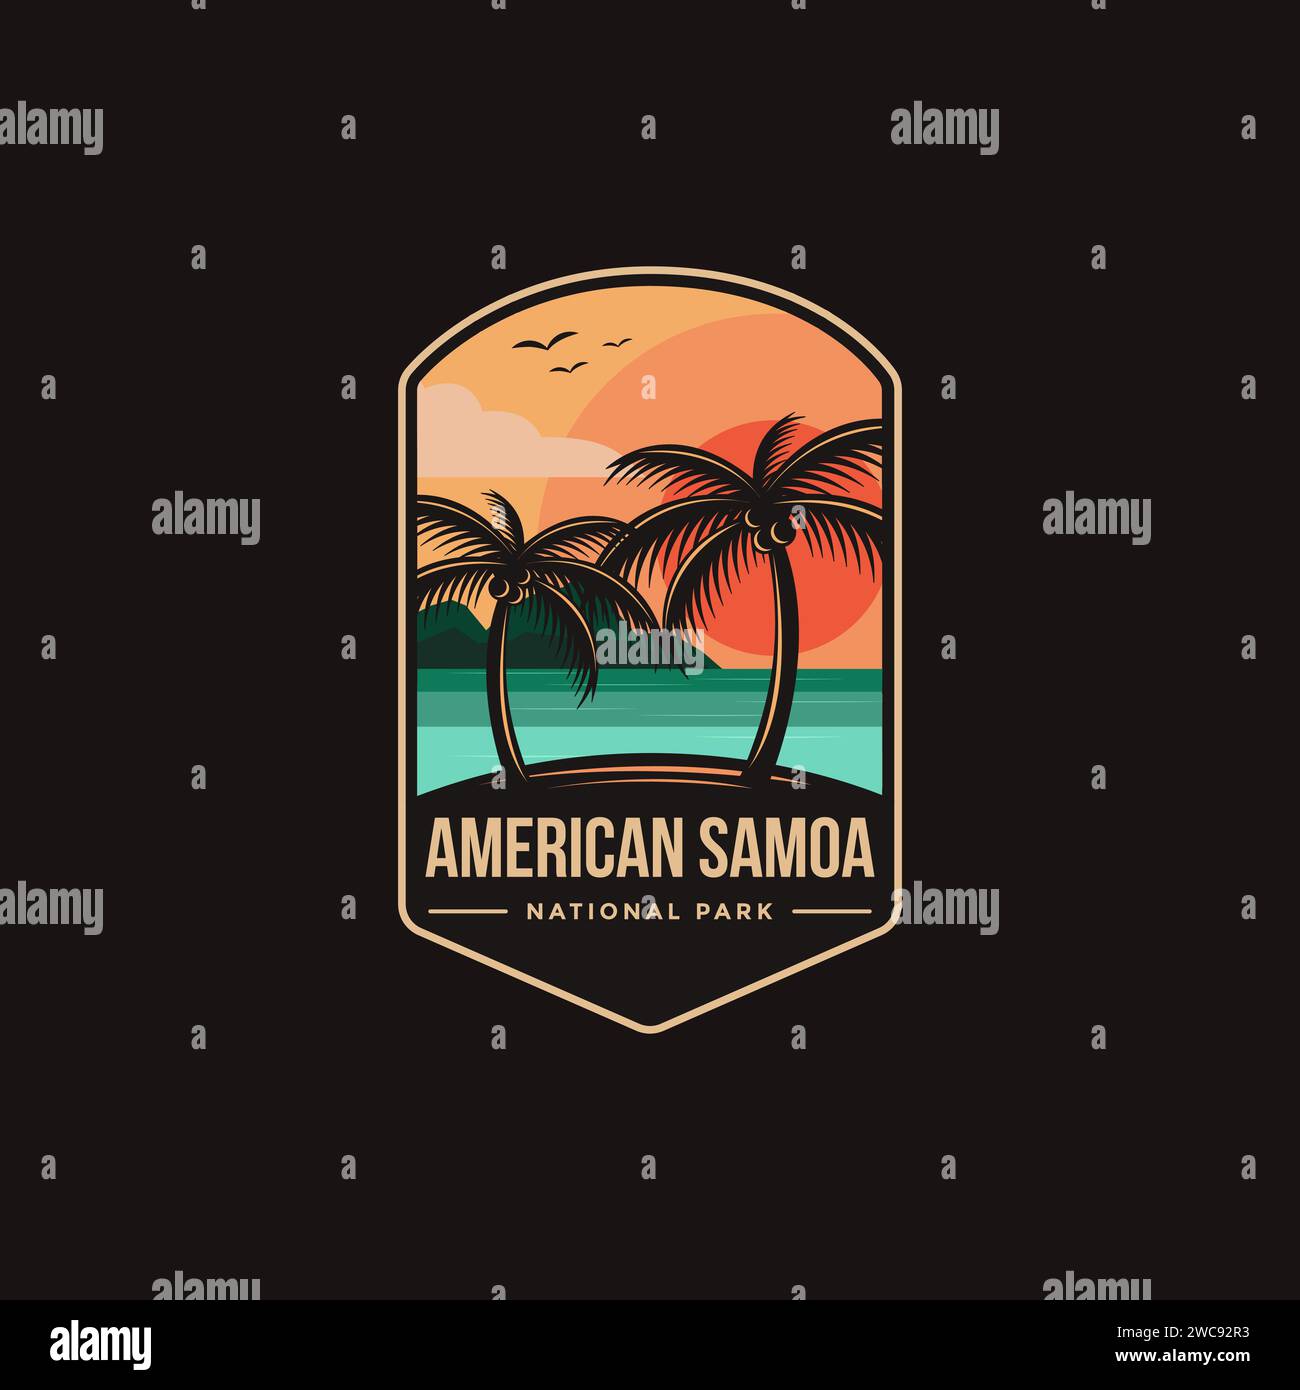 Emblem patch logo illustration of American Samoa National Park on dark background Stock Vector